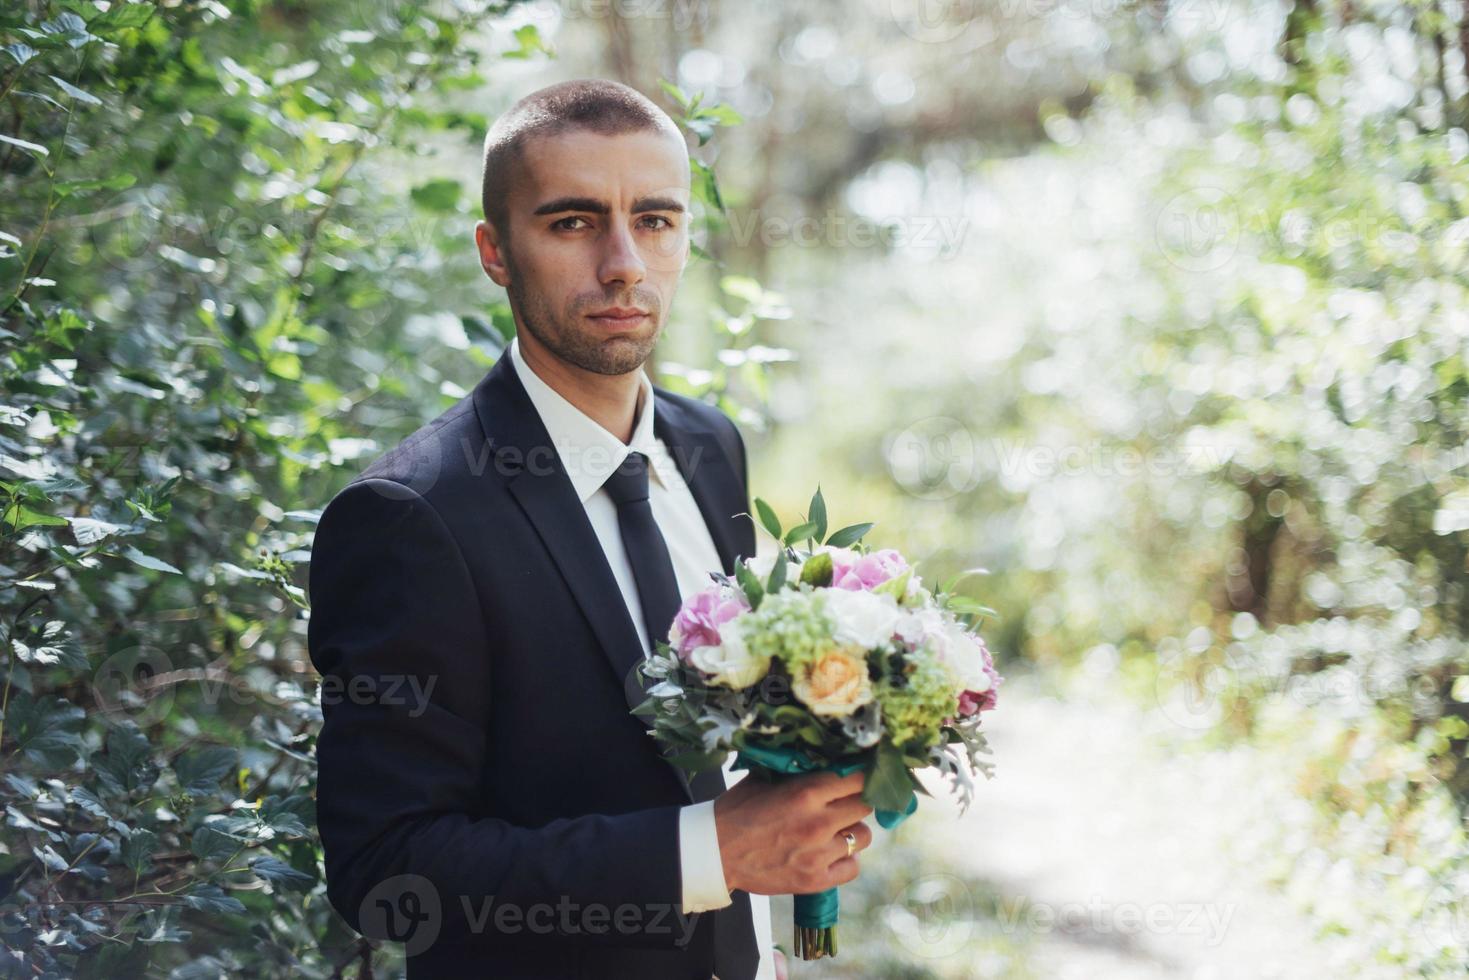 Beautiful wedding bouquet in hands of the groom photo